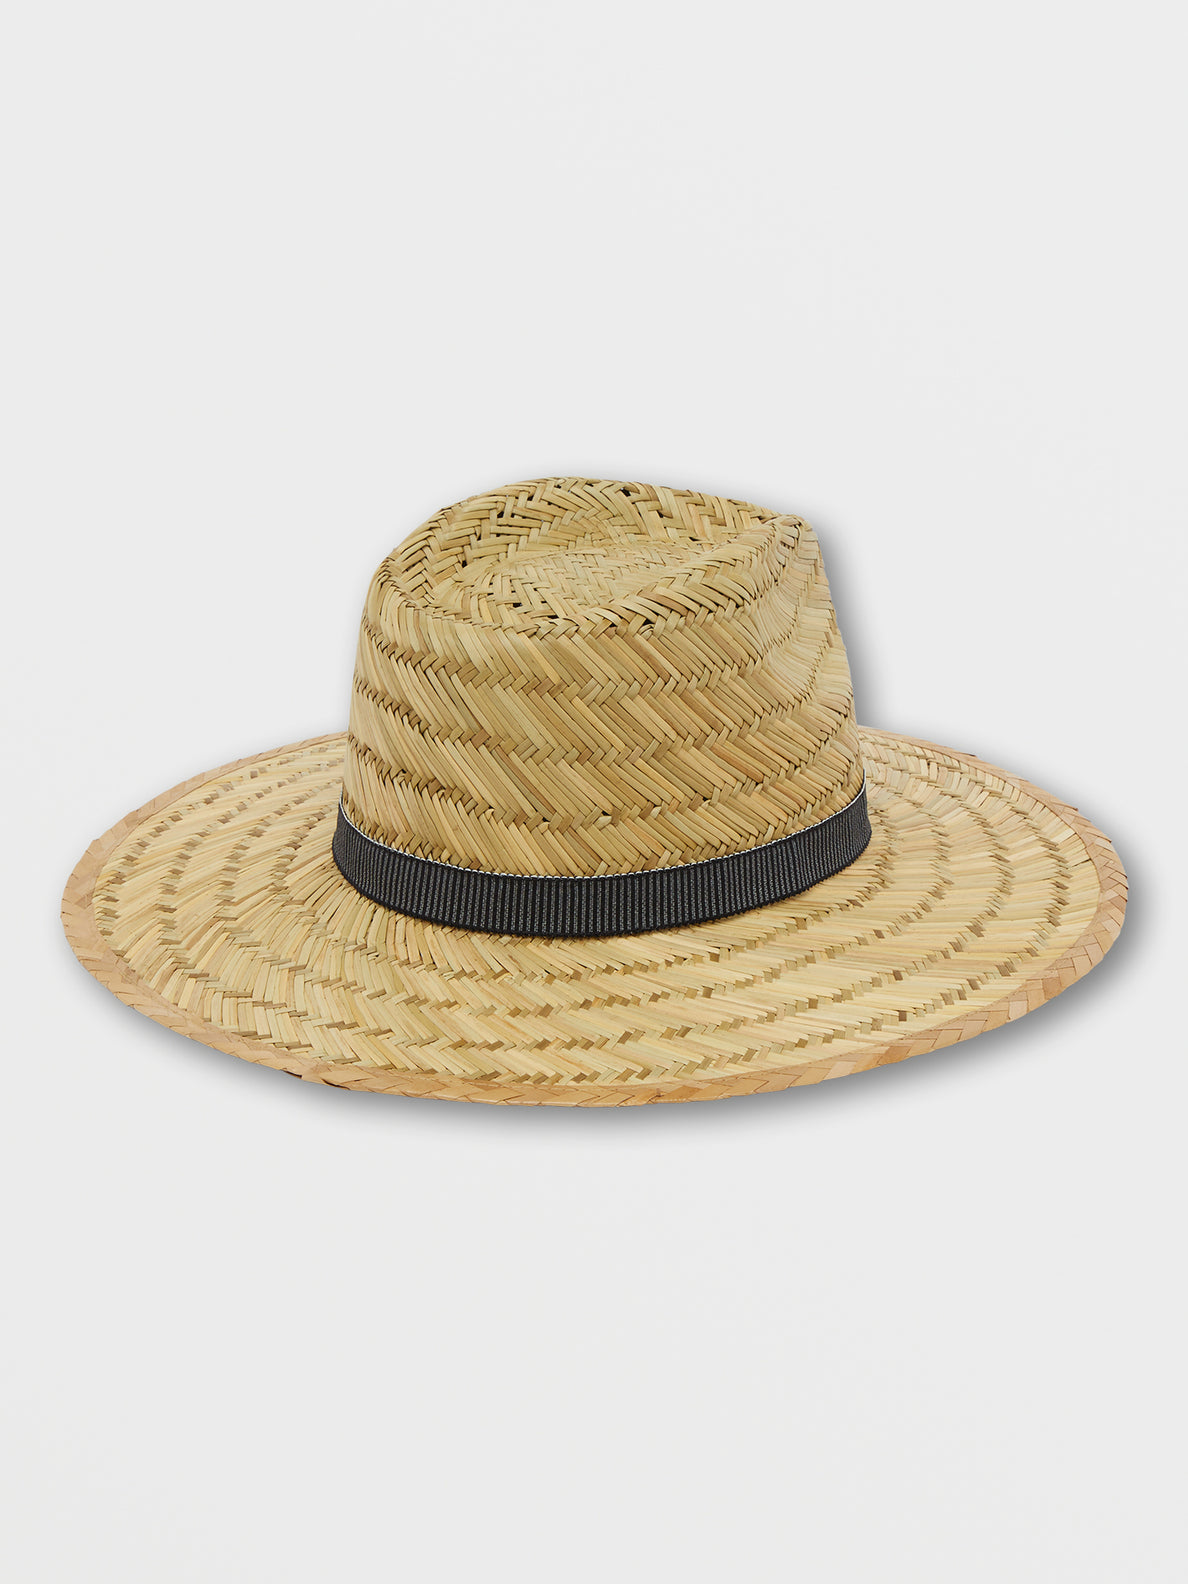 Women French Retro Large Brimmed Straw Hat Female Summer Sun Shade Hat